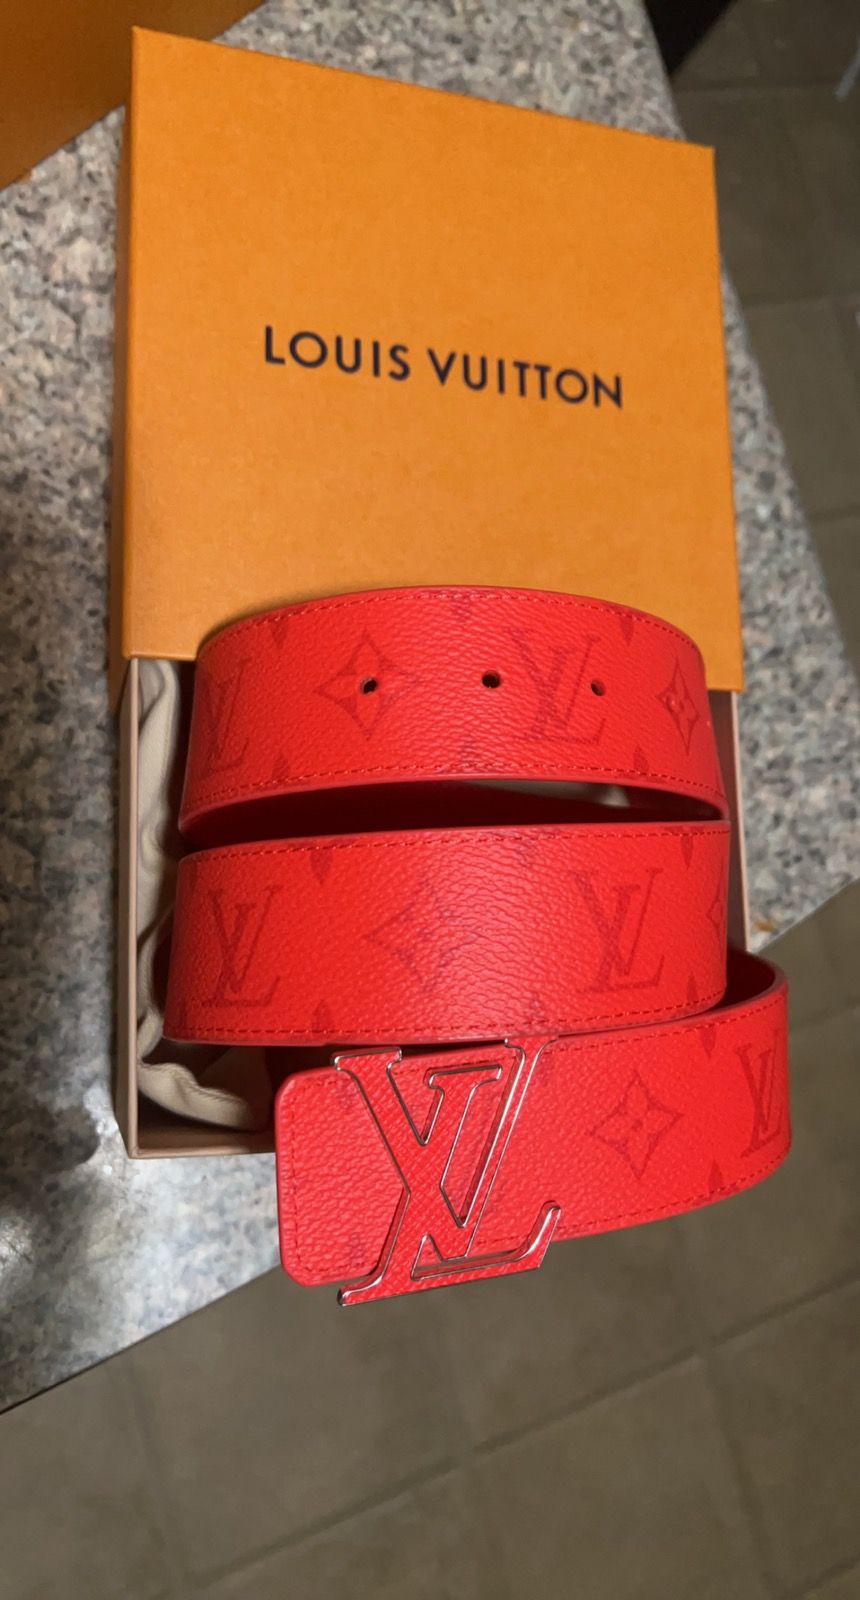 Double Sided Velvet Red and Brown LV Belt. Never